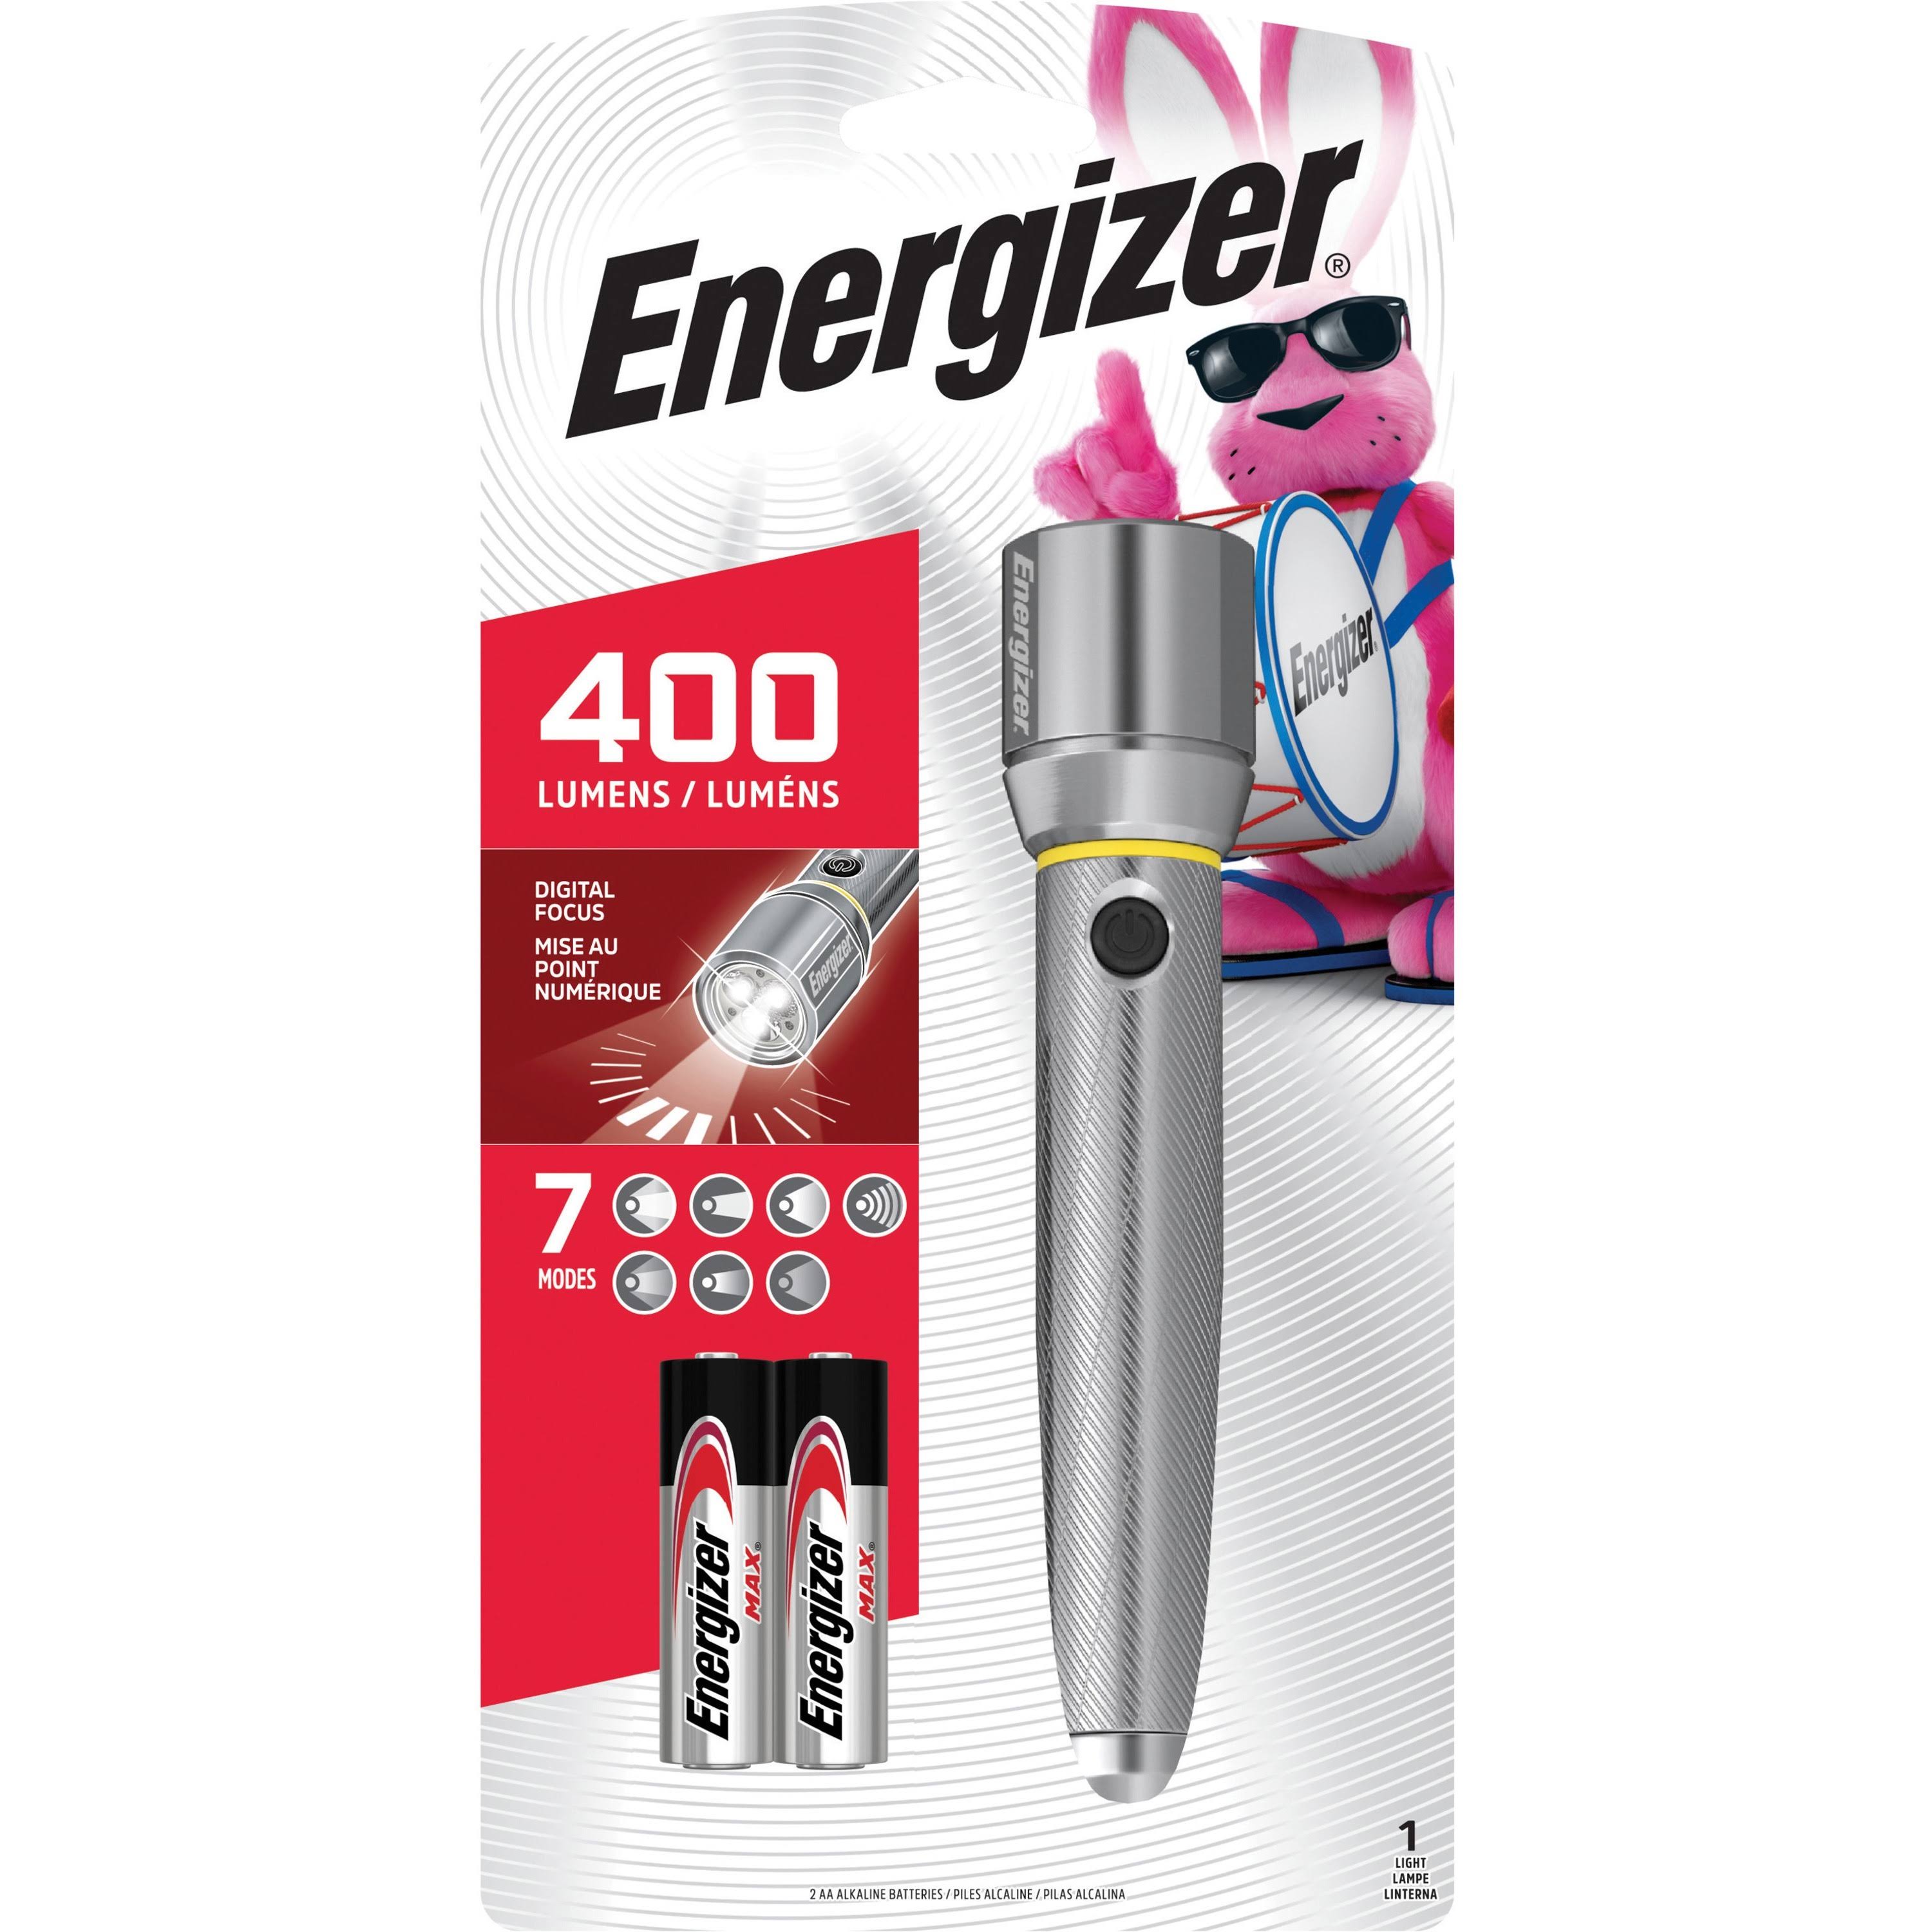 Energizer Performance Metal Led Flashlight with Digital Focus and Hd Optics